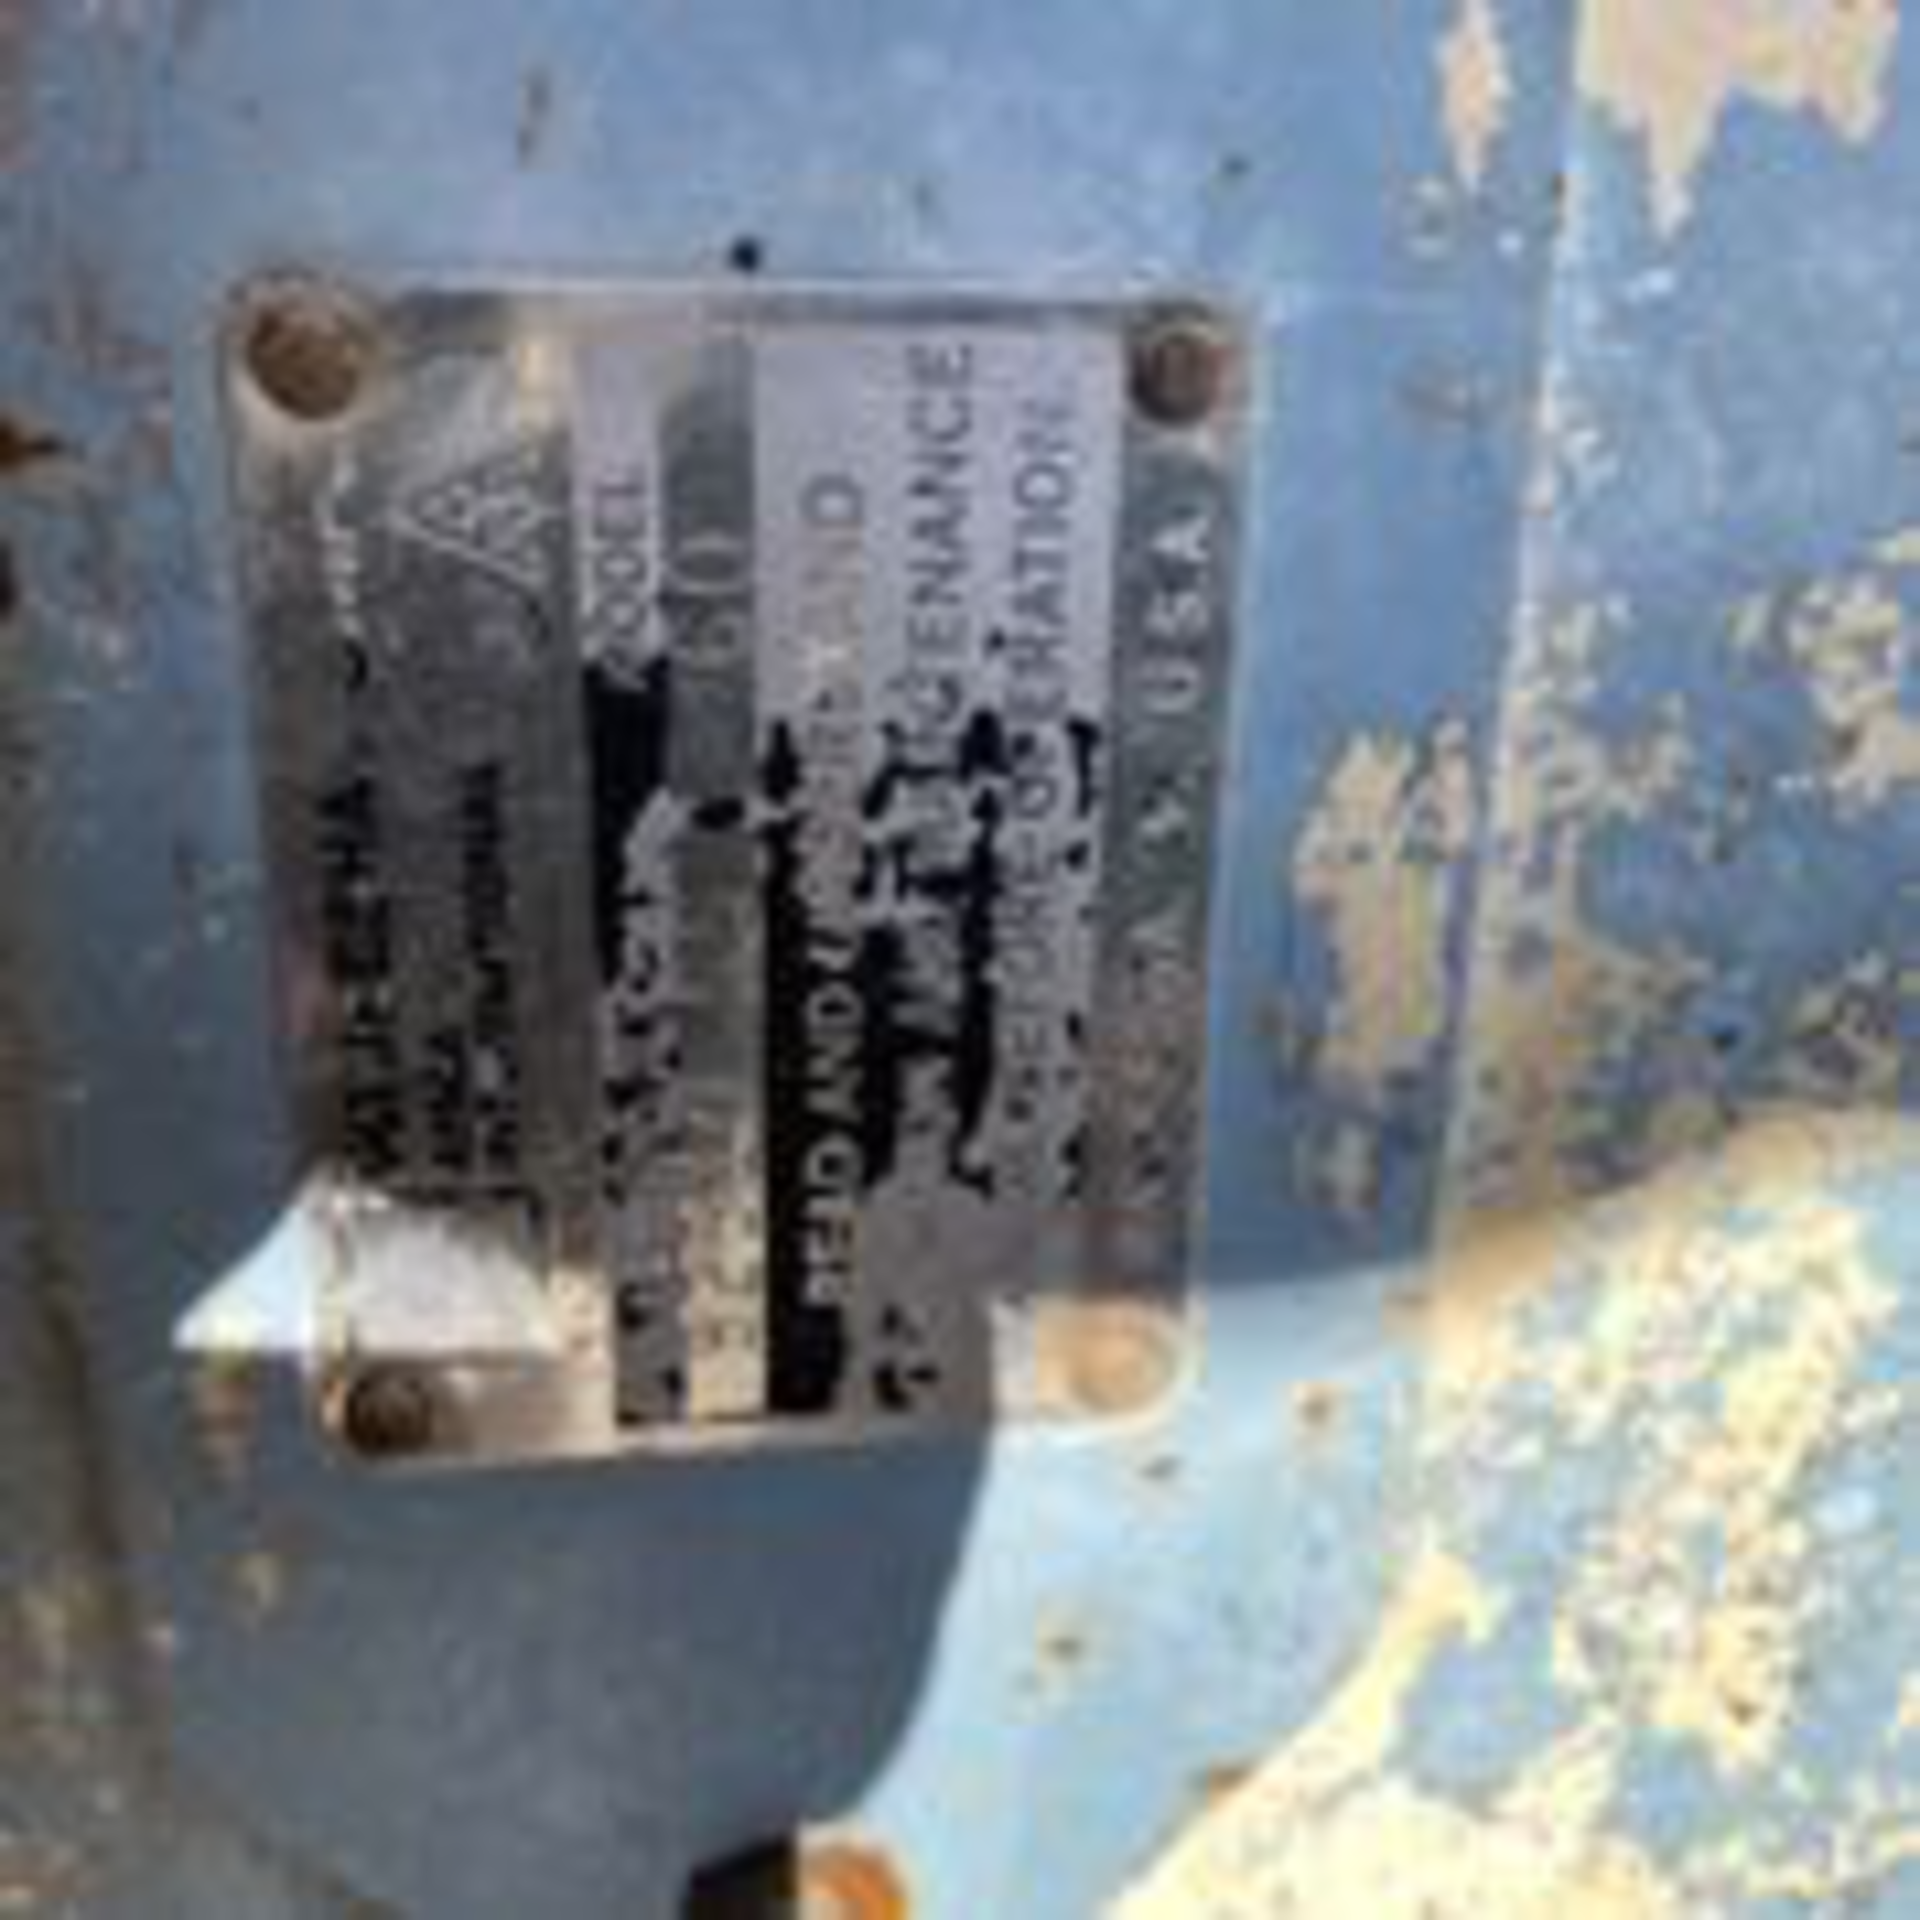 Waukesha Pump Model 60 S/N 82310 SS. LOADING FEE $100 - Image 4 of 8